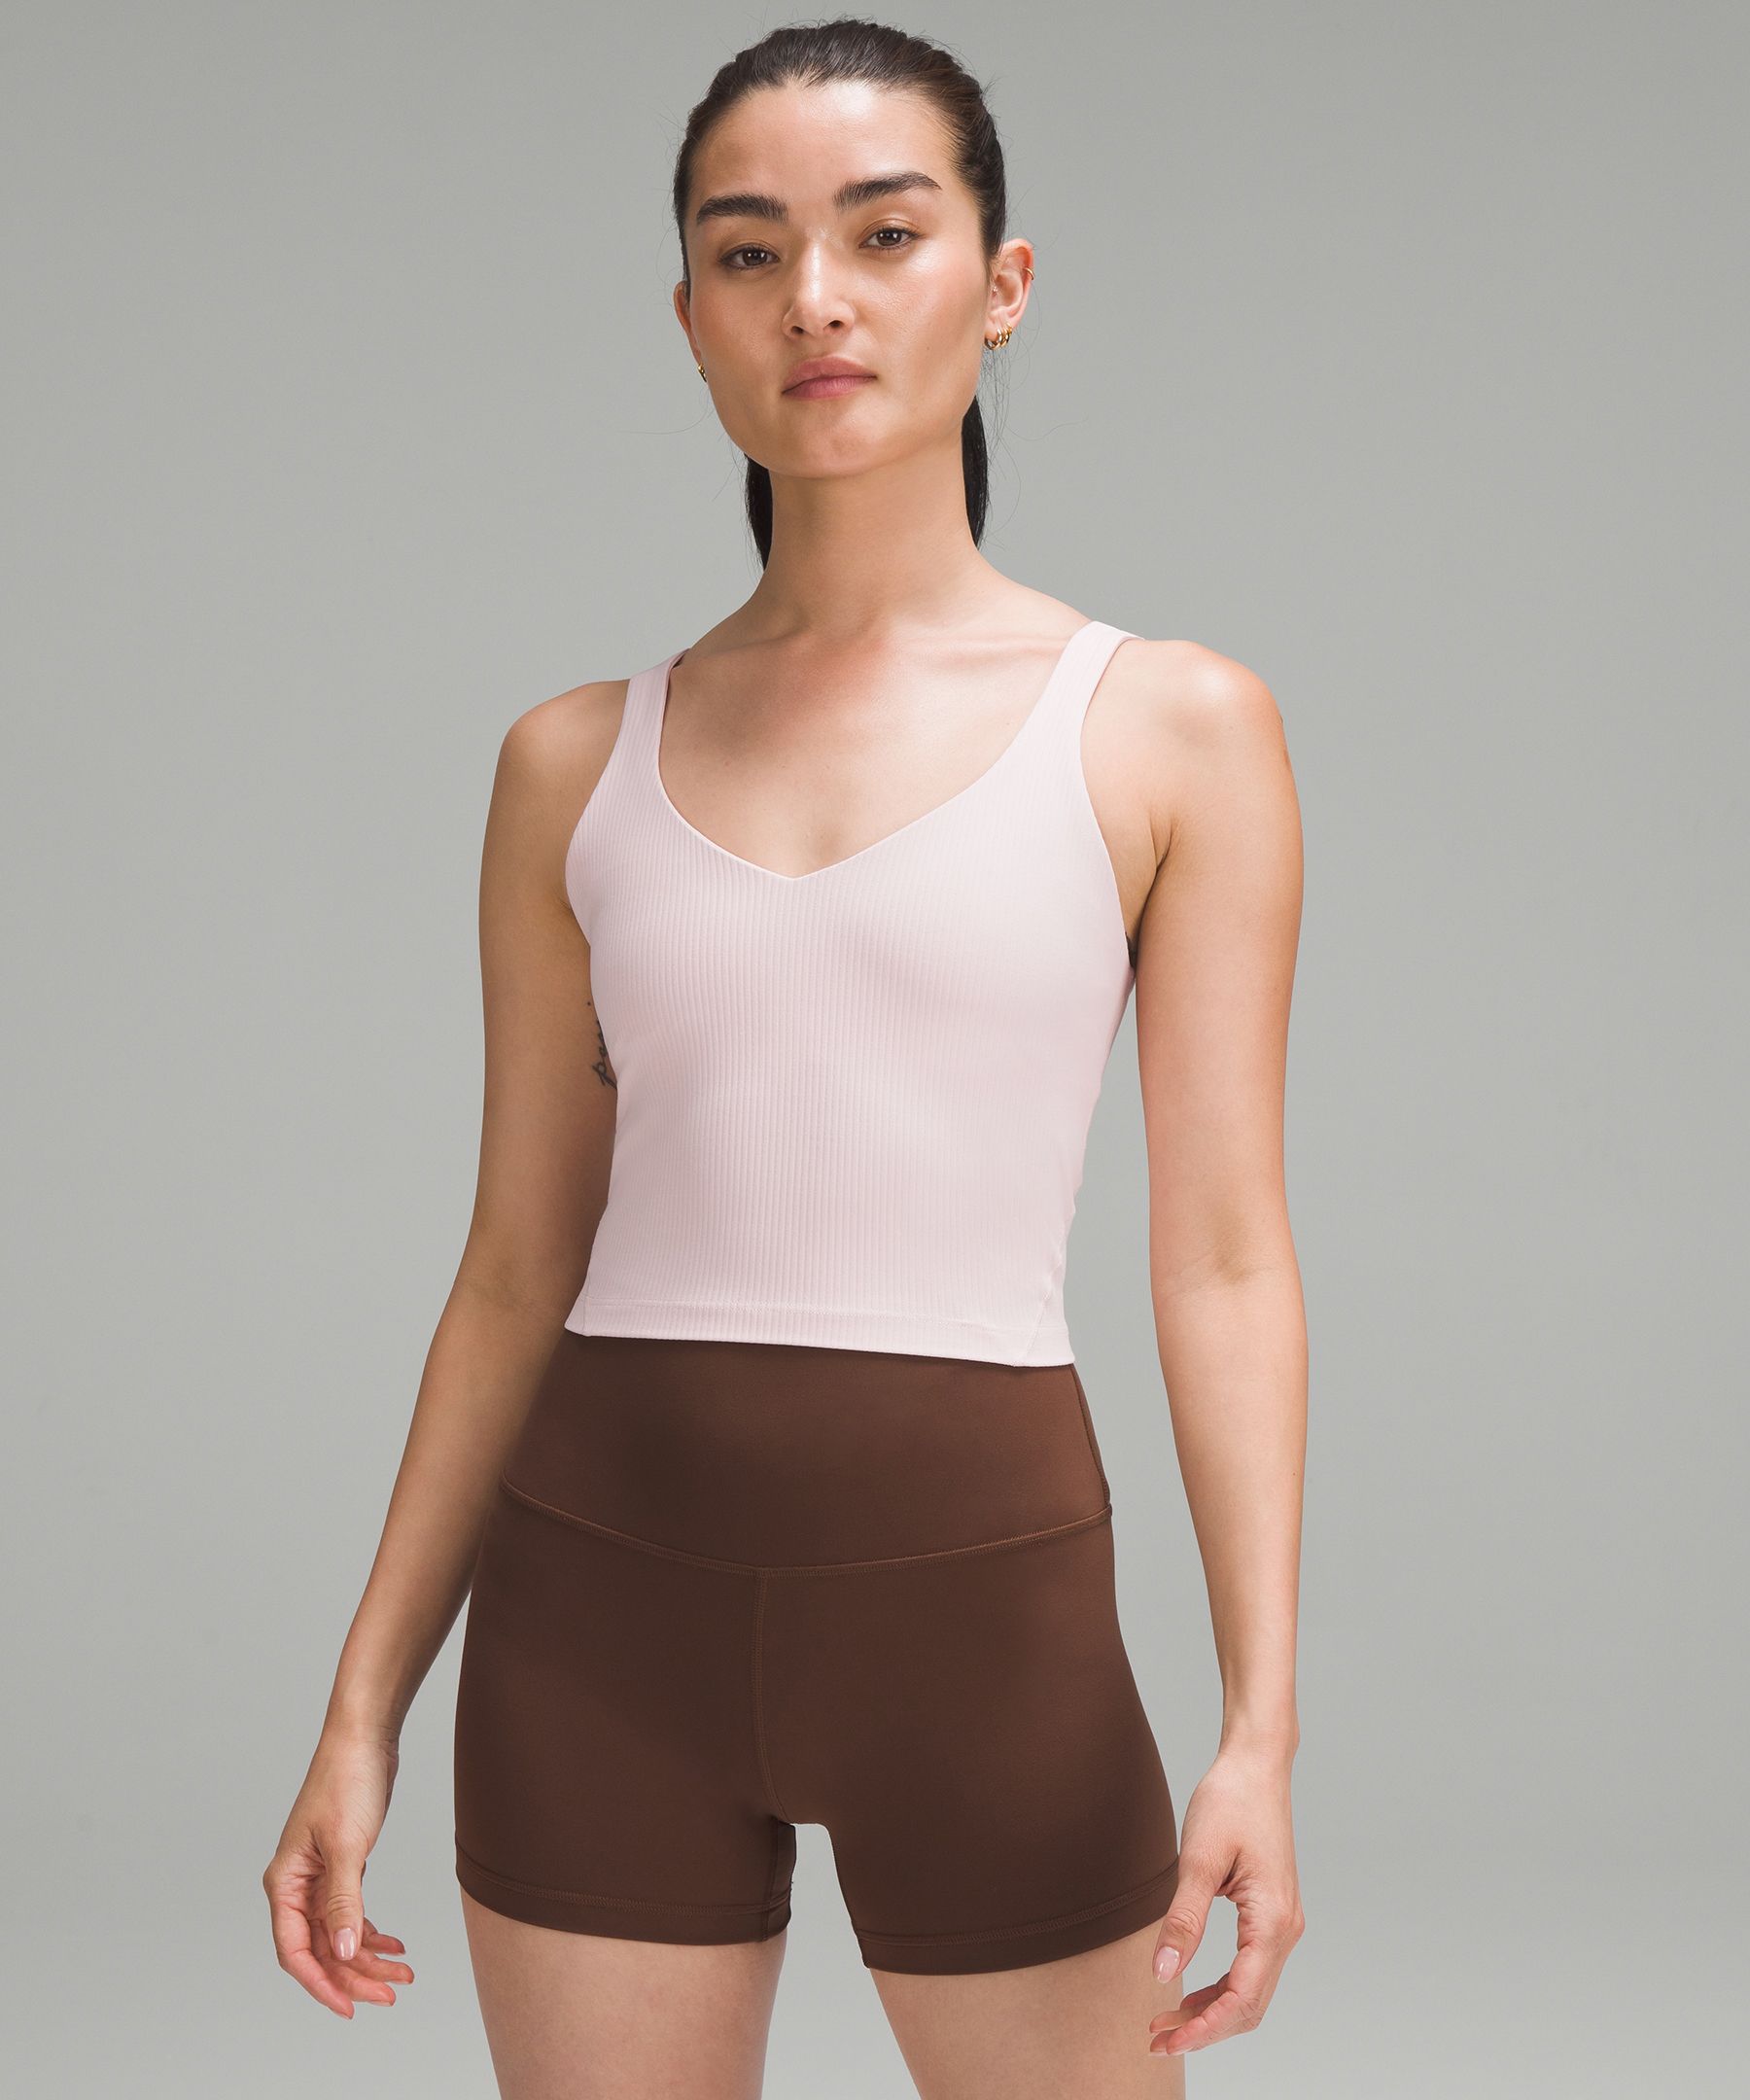 lululemon - Pink lululemon Align Tank on Designer Wardrobe